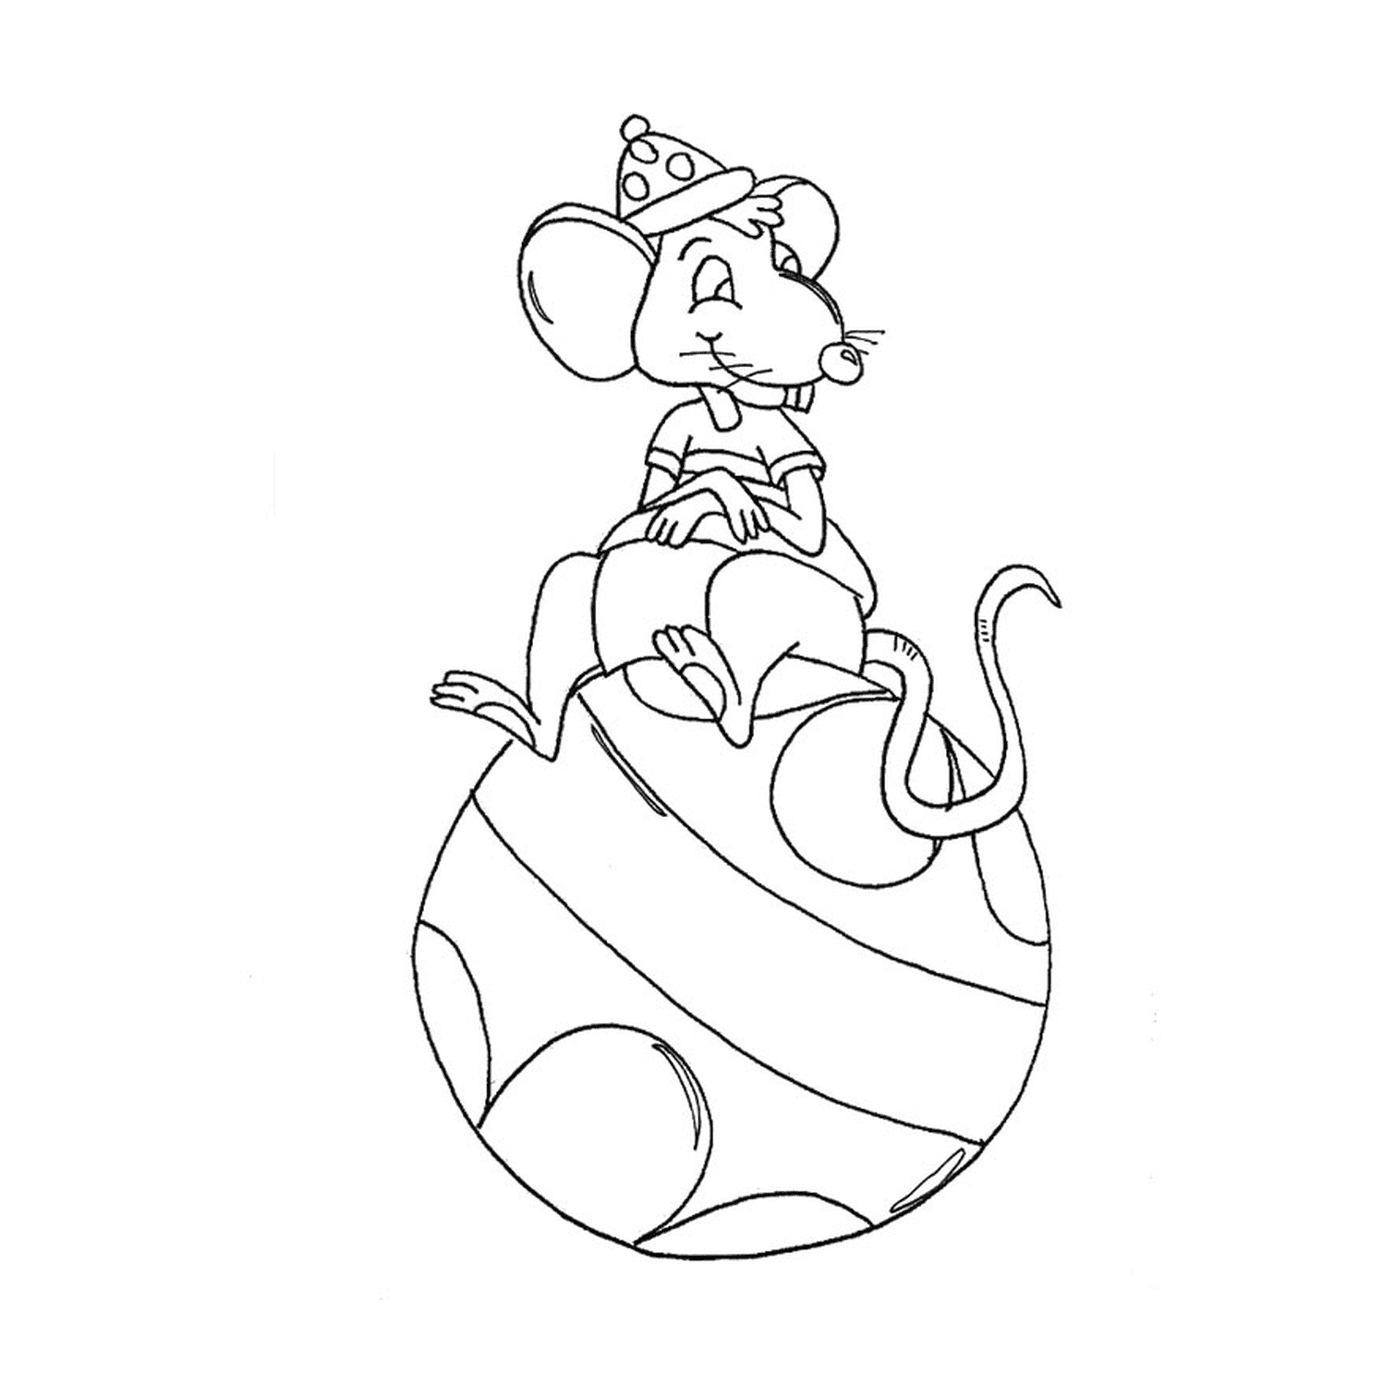  Un ratón sentado en un globo 